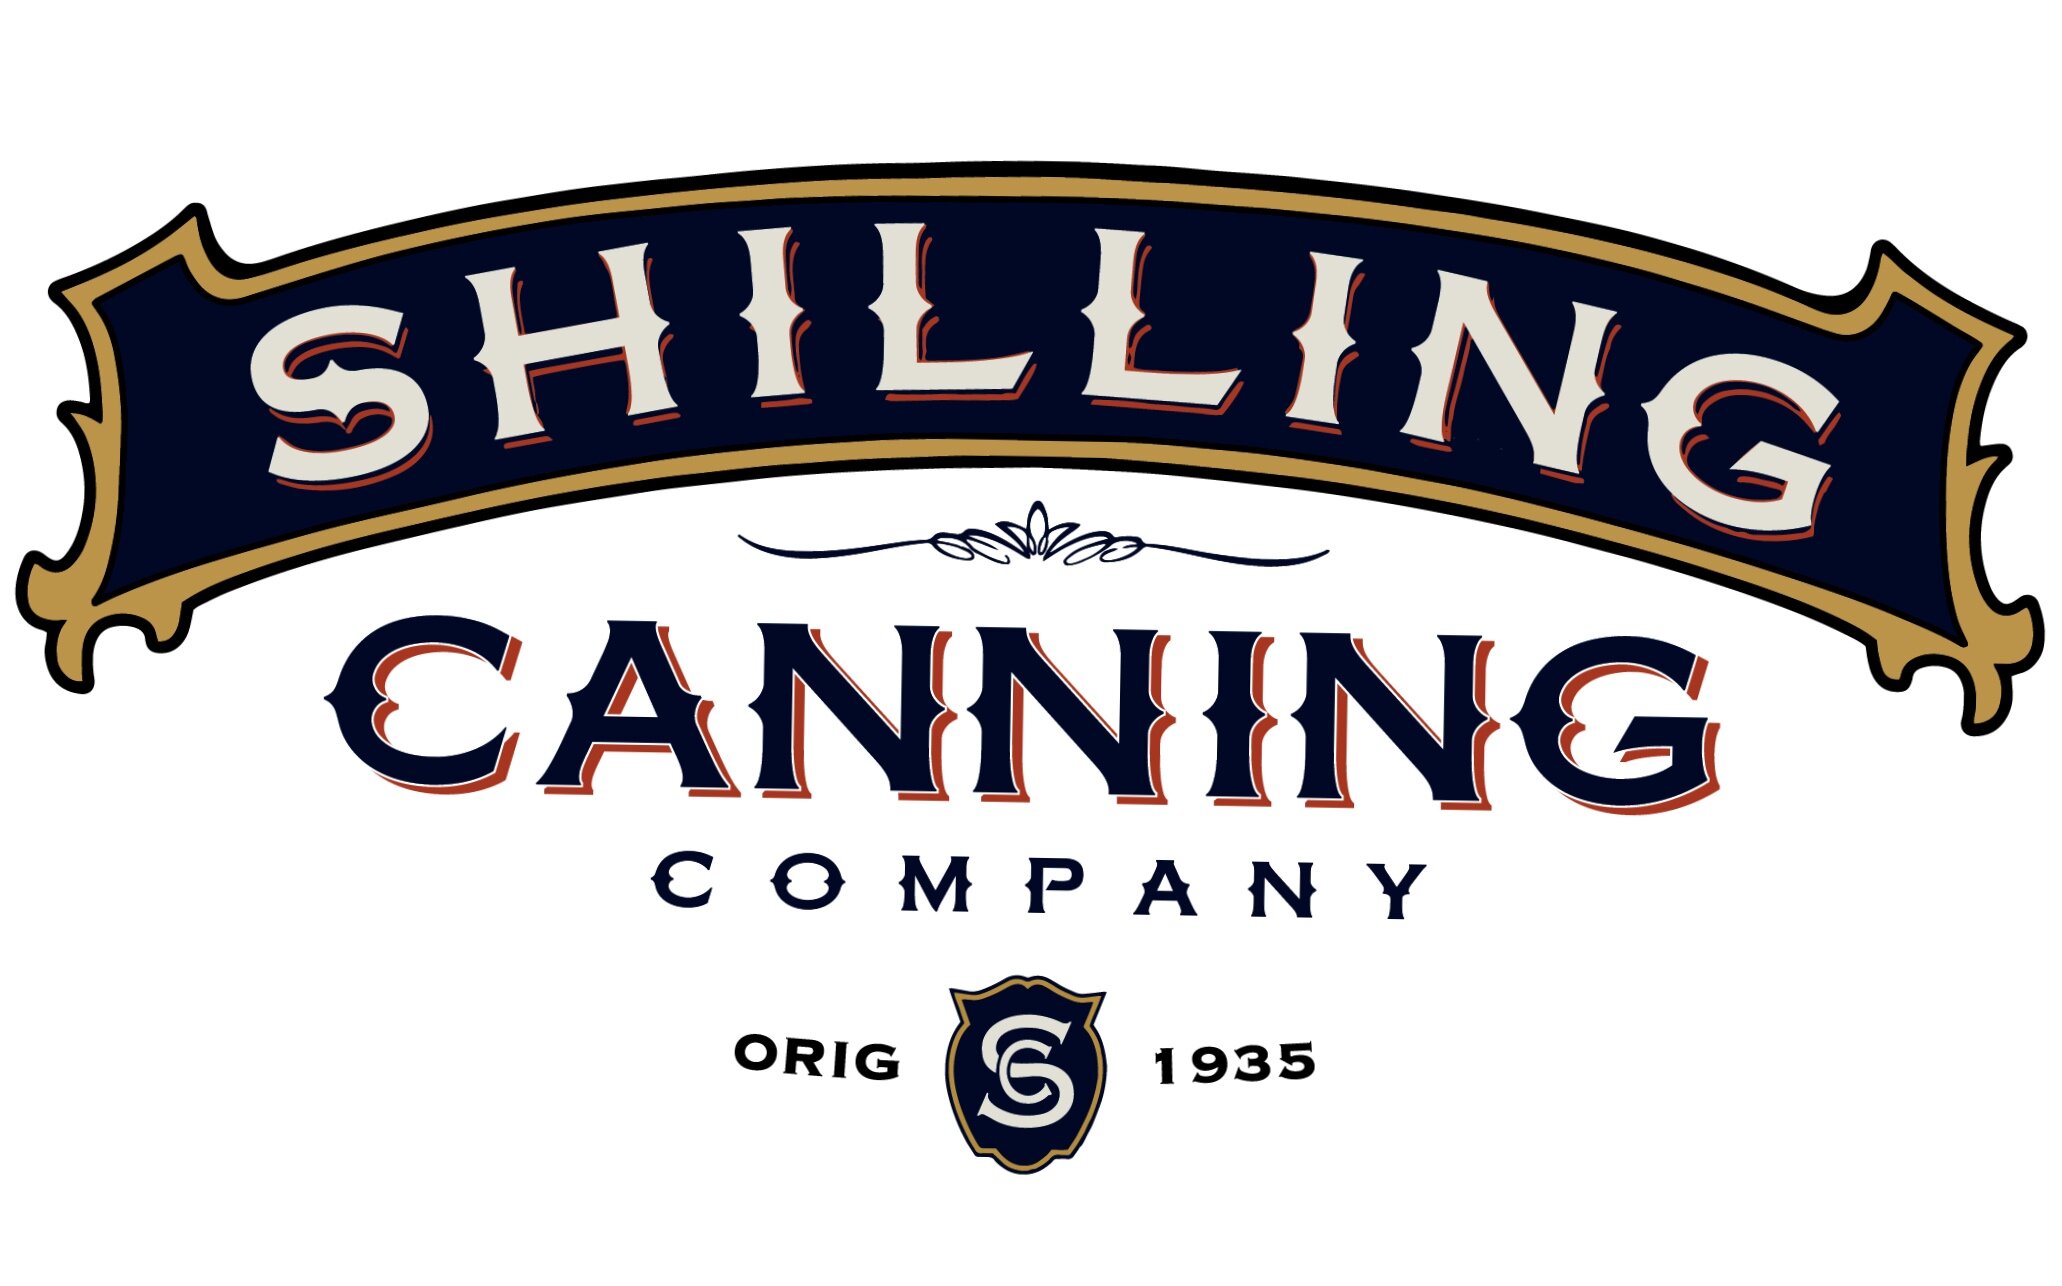 Shilling Canning Company logo.png